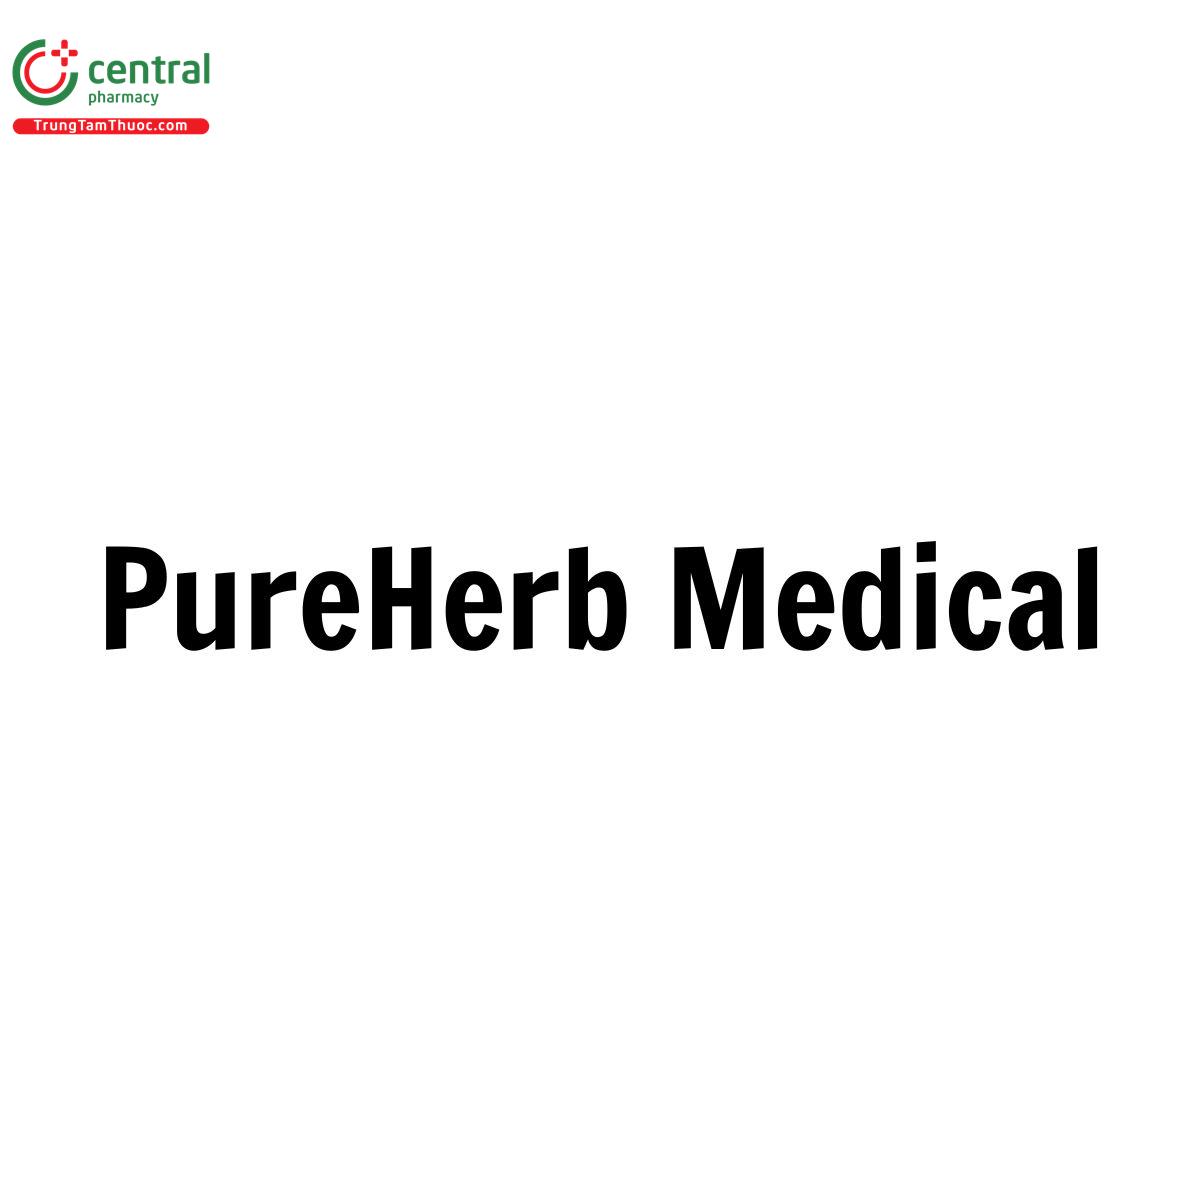 PureHerb Medical